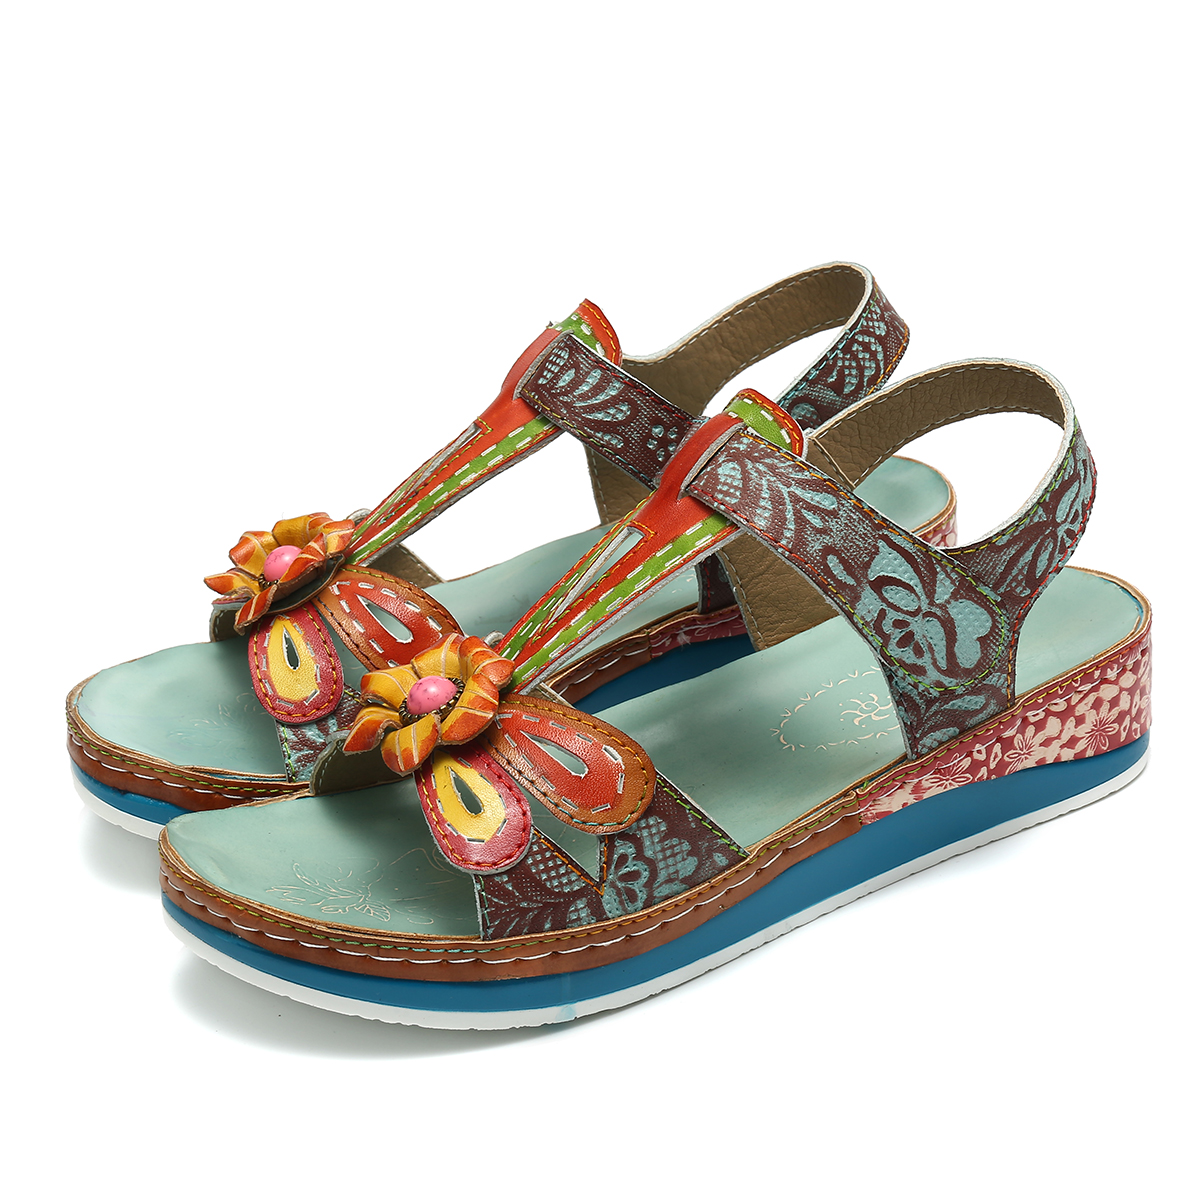 gracosy Leather Sandals for Women, Handmade Flower Pattern Summer Flat ...